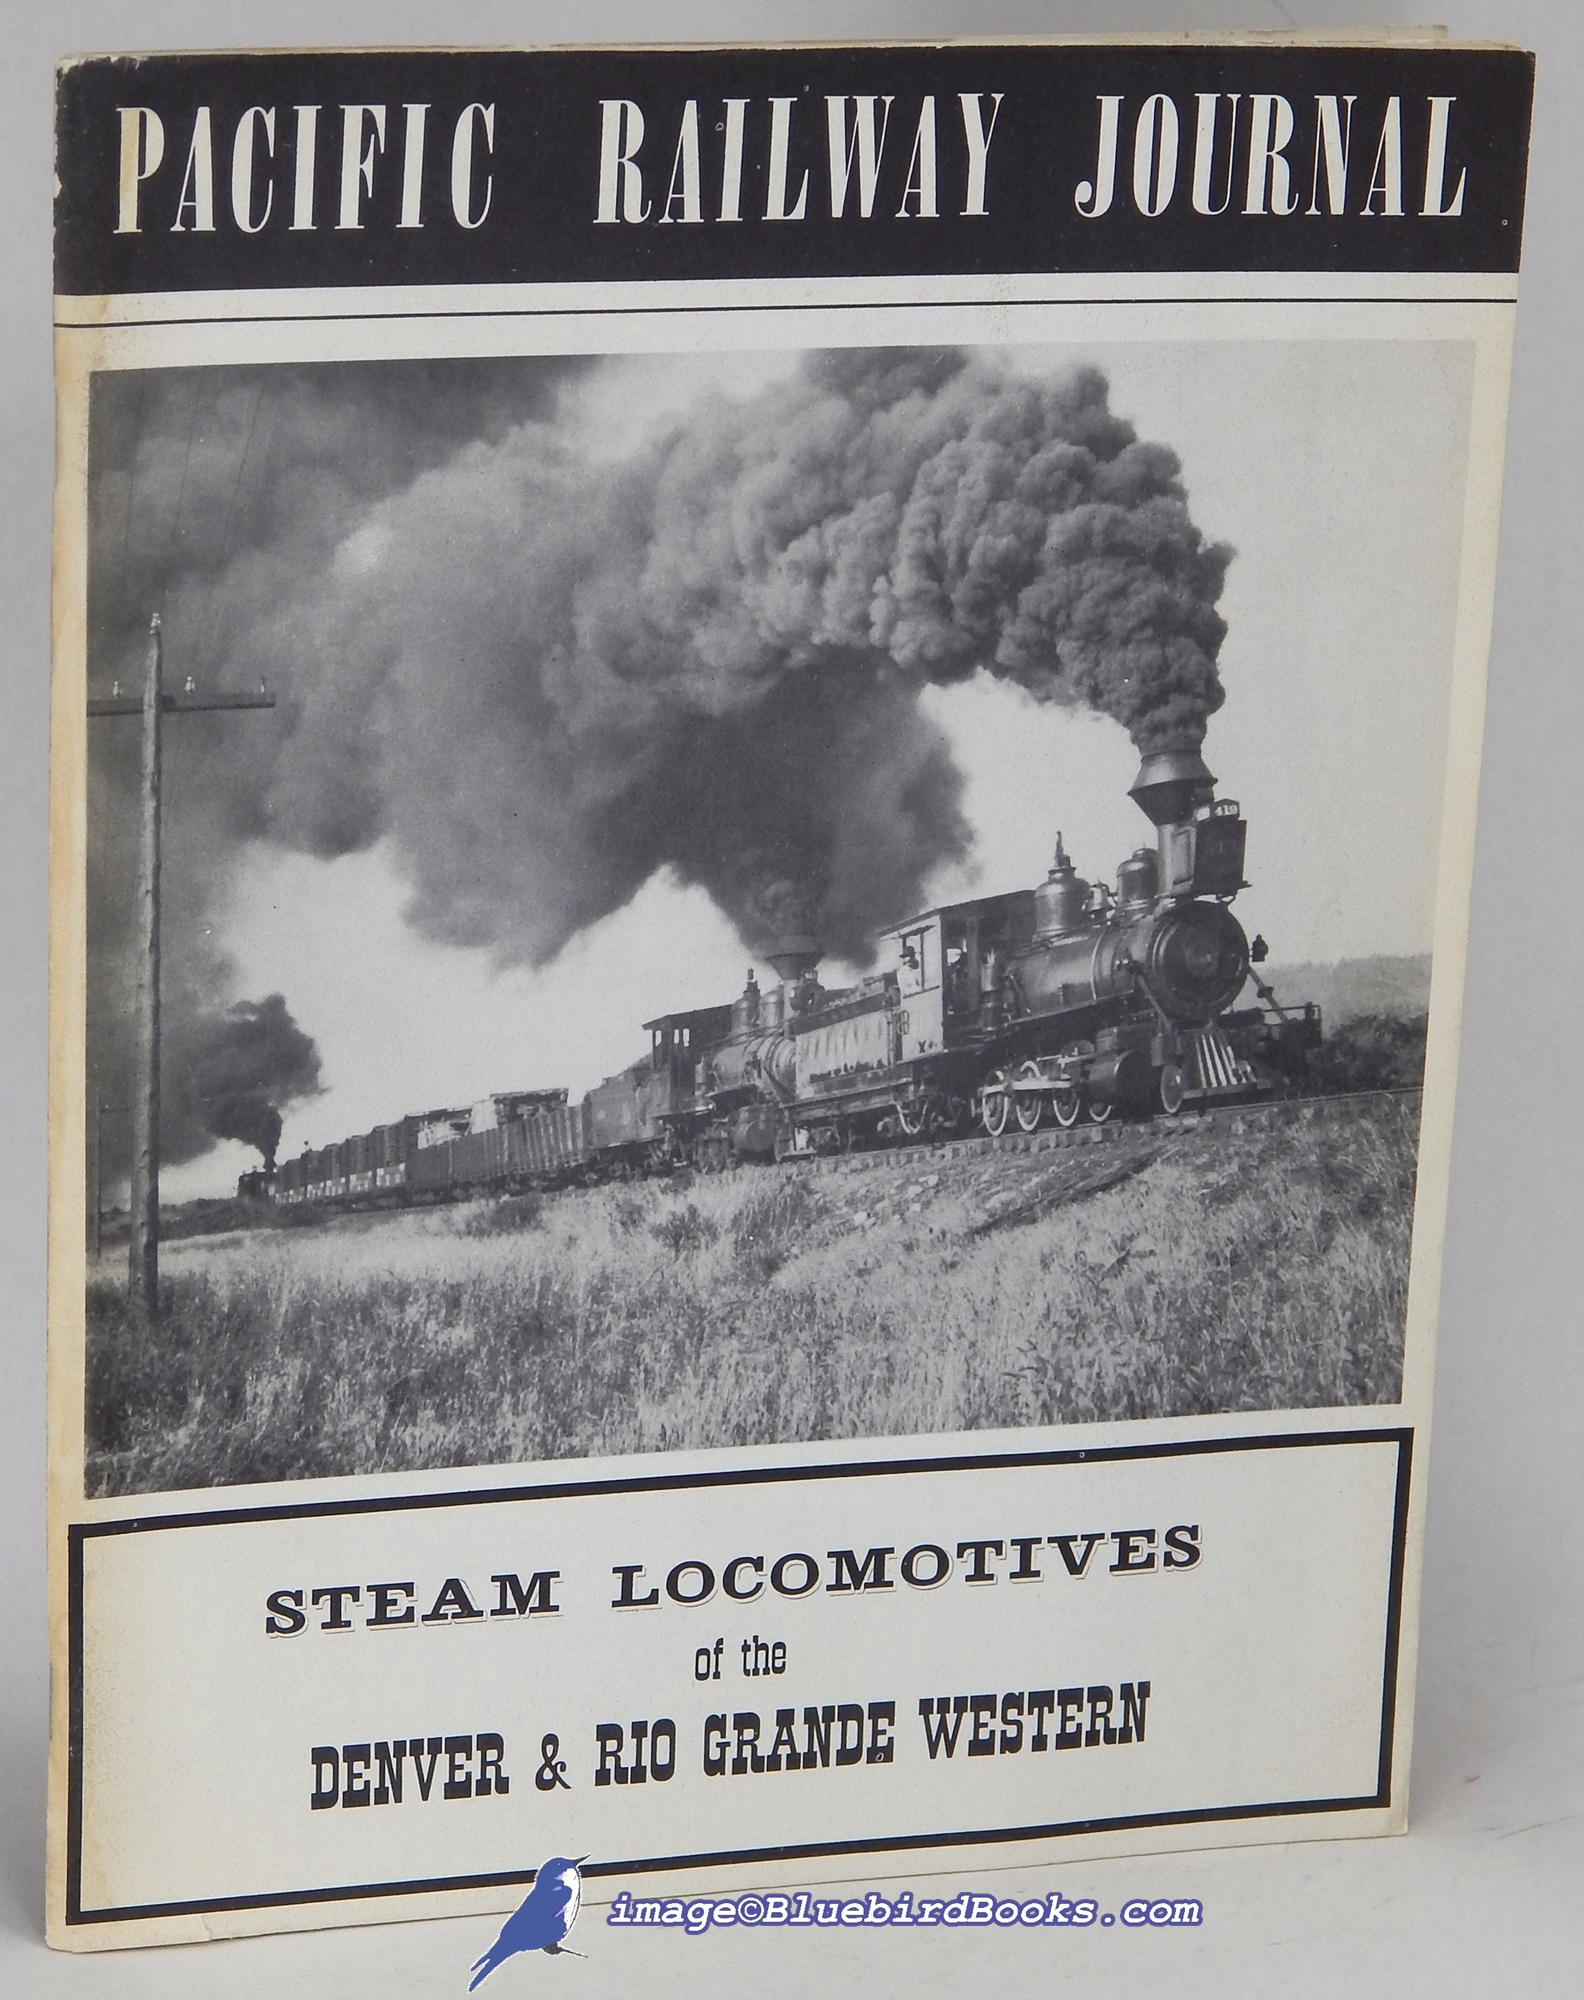 WARNER, PAUL T.; DUKE, DONALD (EDITOR) - Steam Locomotives of the Denver & Rio Grande Western (Pacific Railway Journal: Volume 2, Number 3)